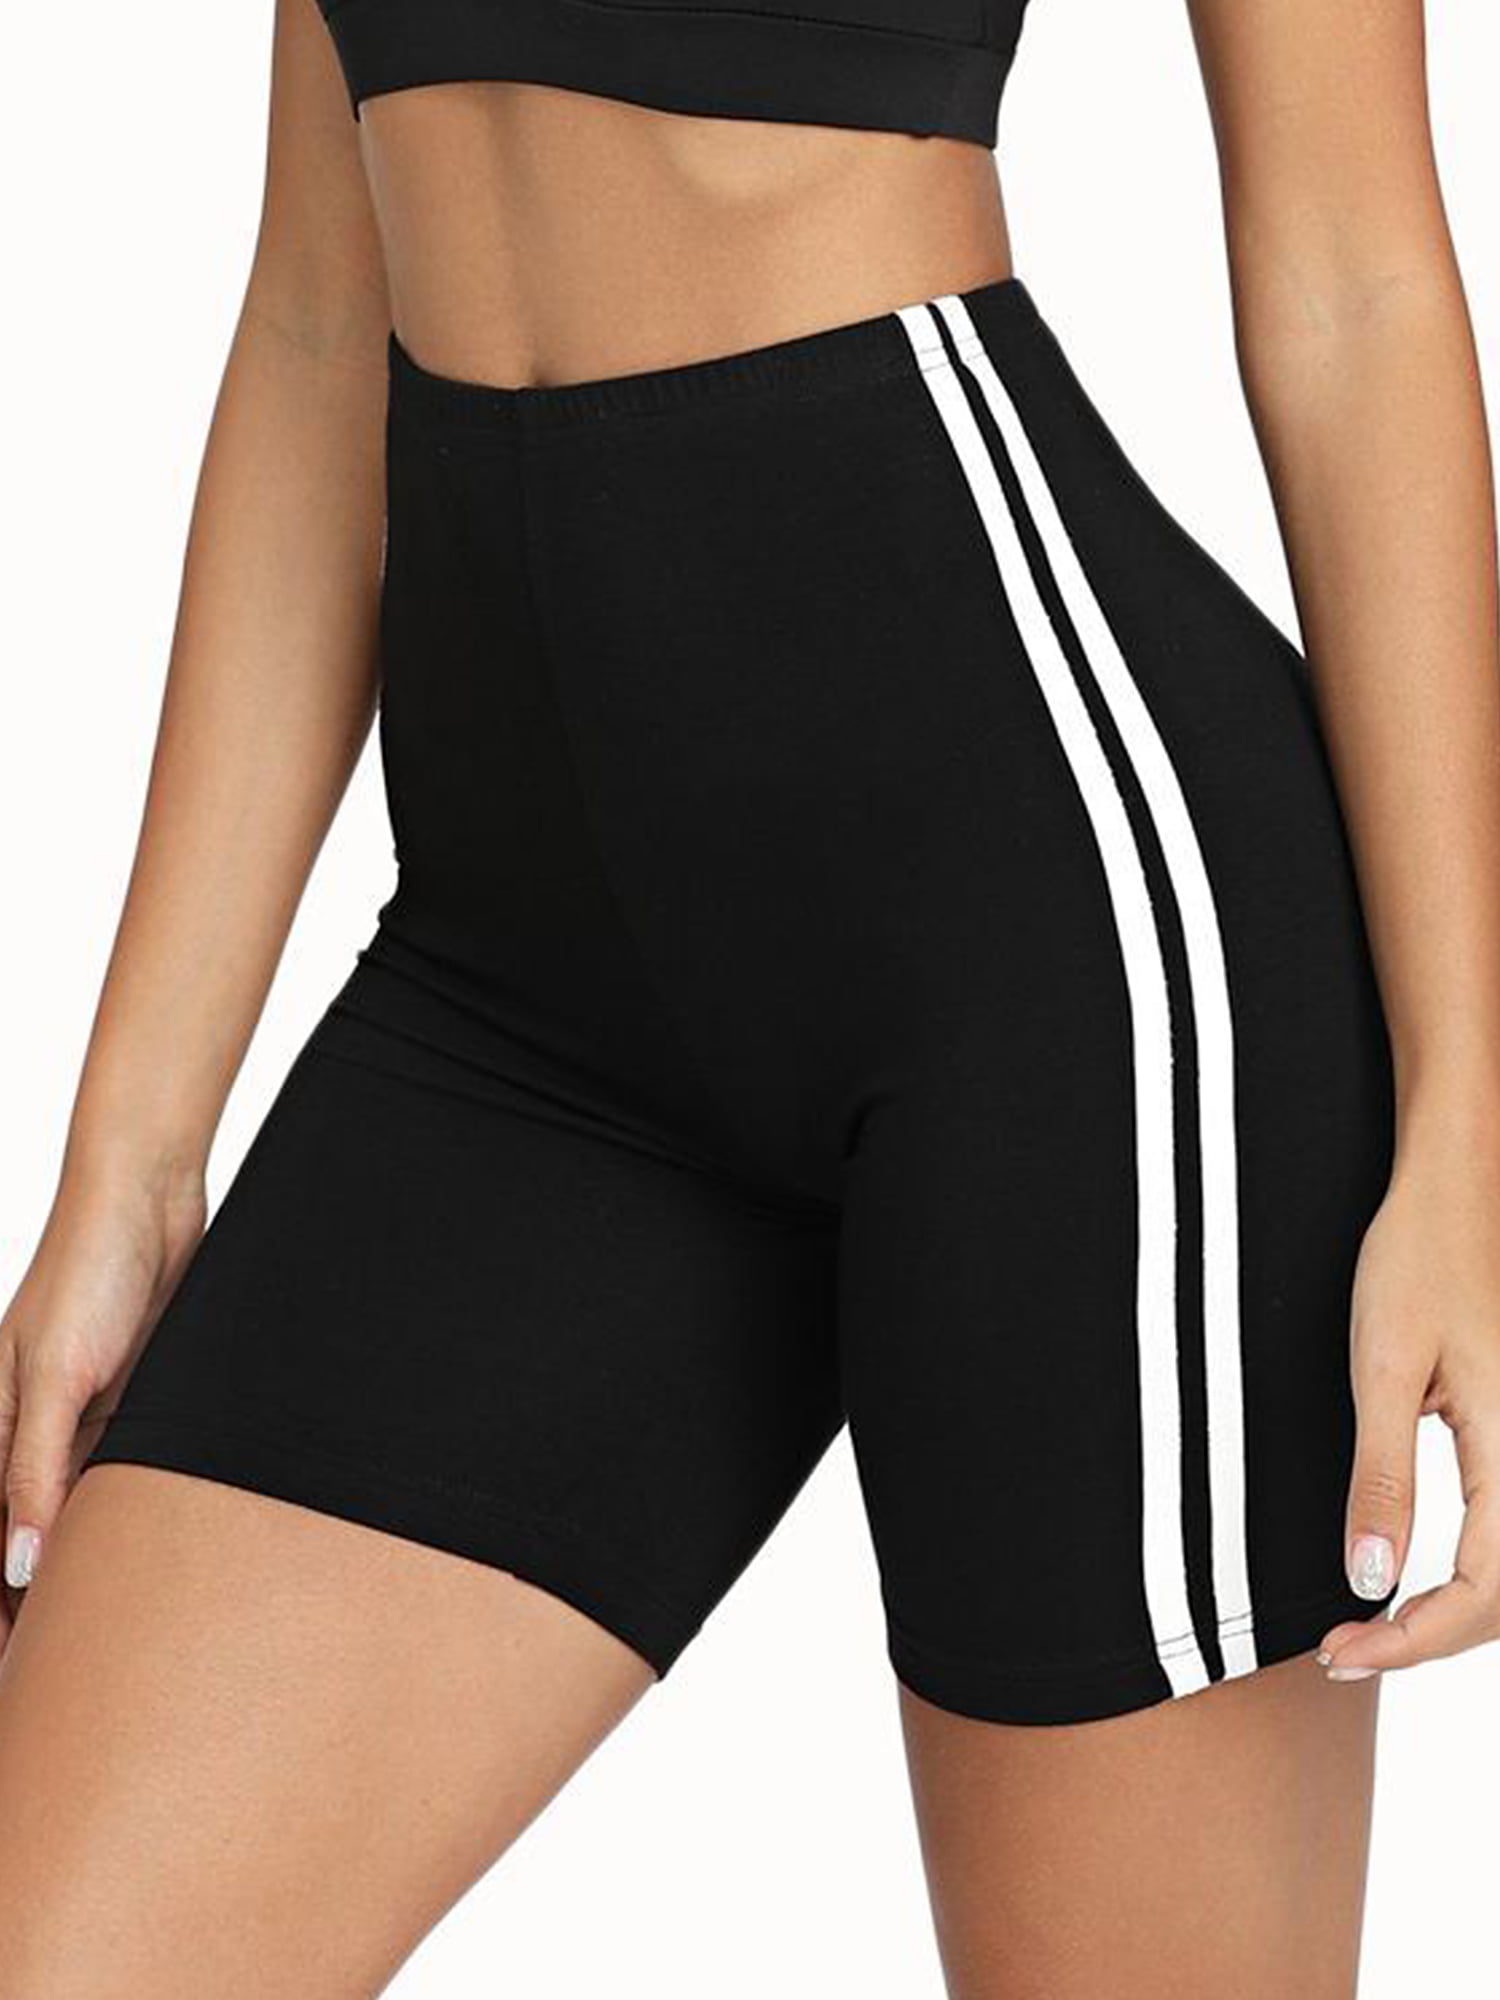 FitsT4 8 Women's Activewear Athletic Bermuda Shorts Active Yoga Lounge Short Pants Gym Workout Running Shorts